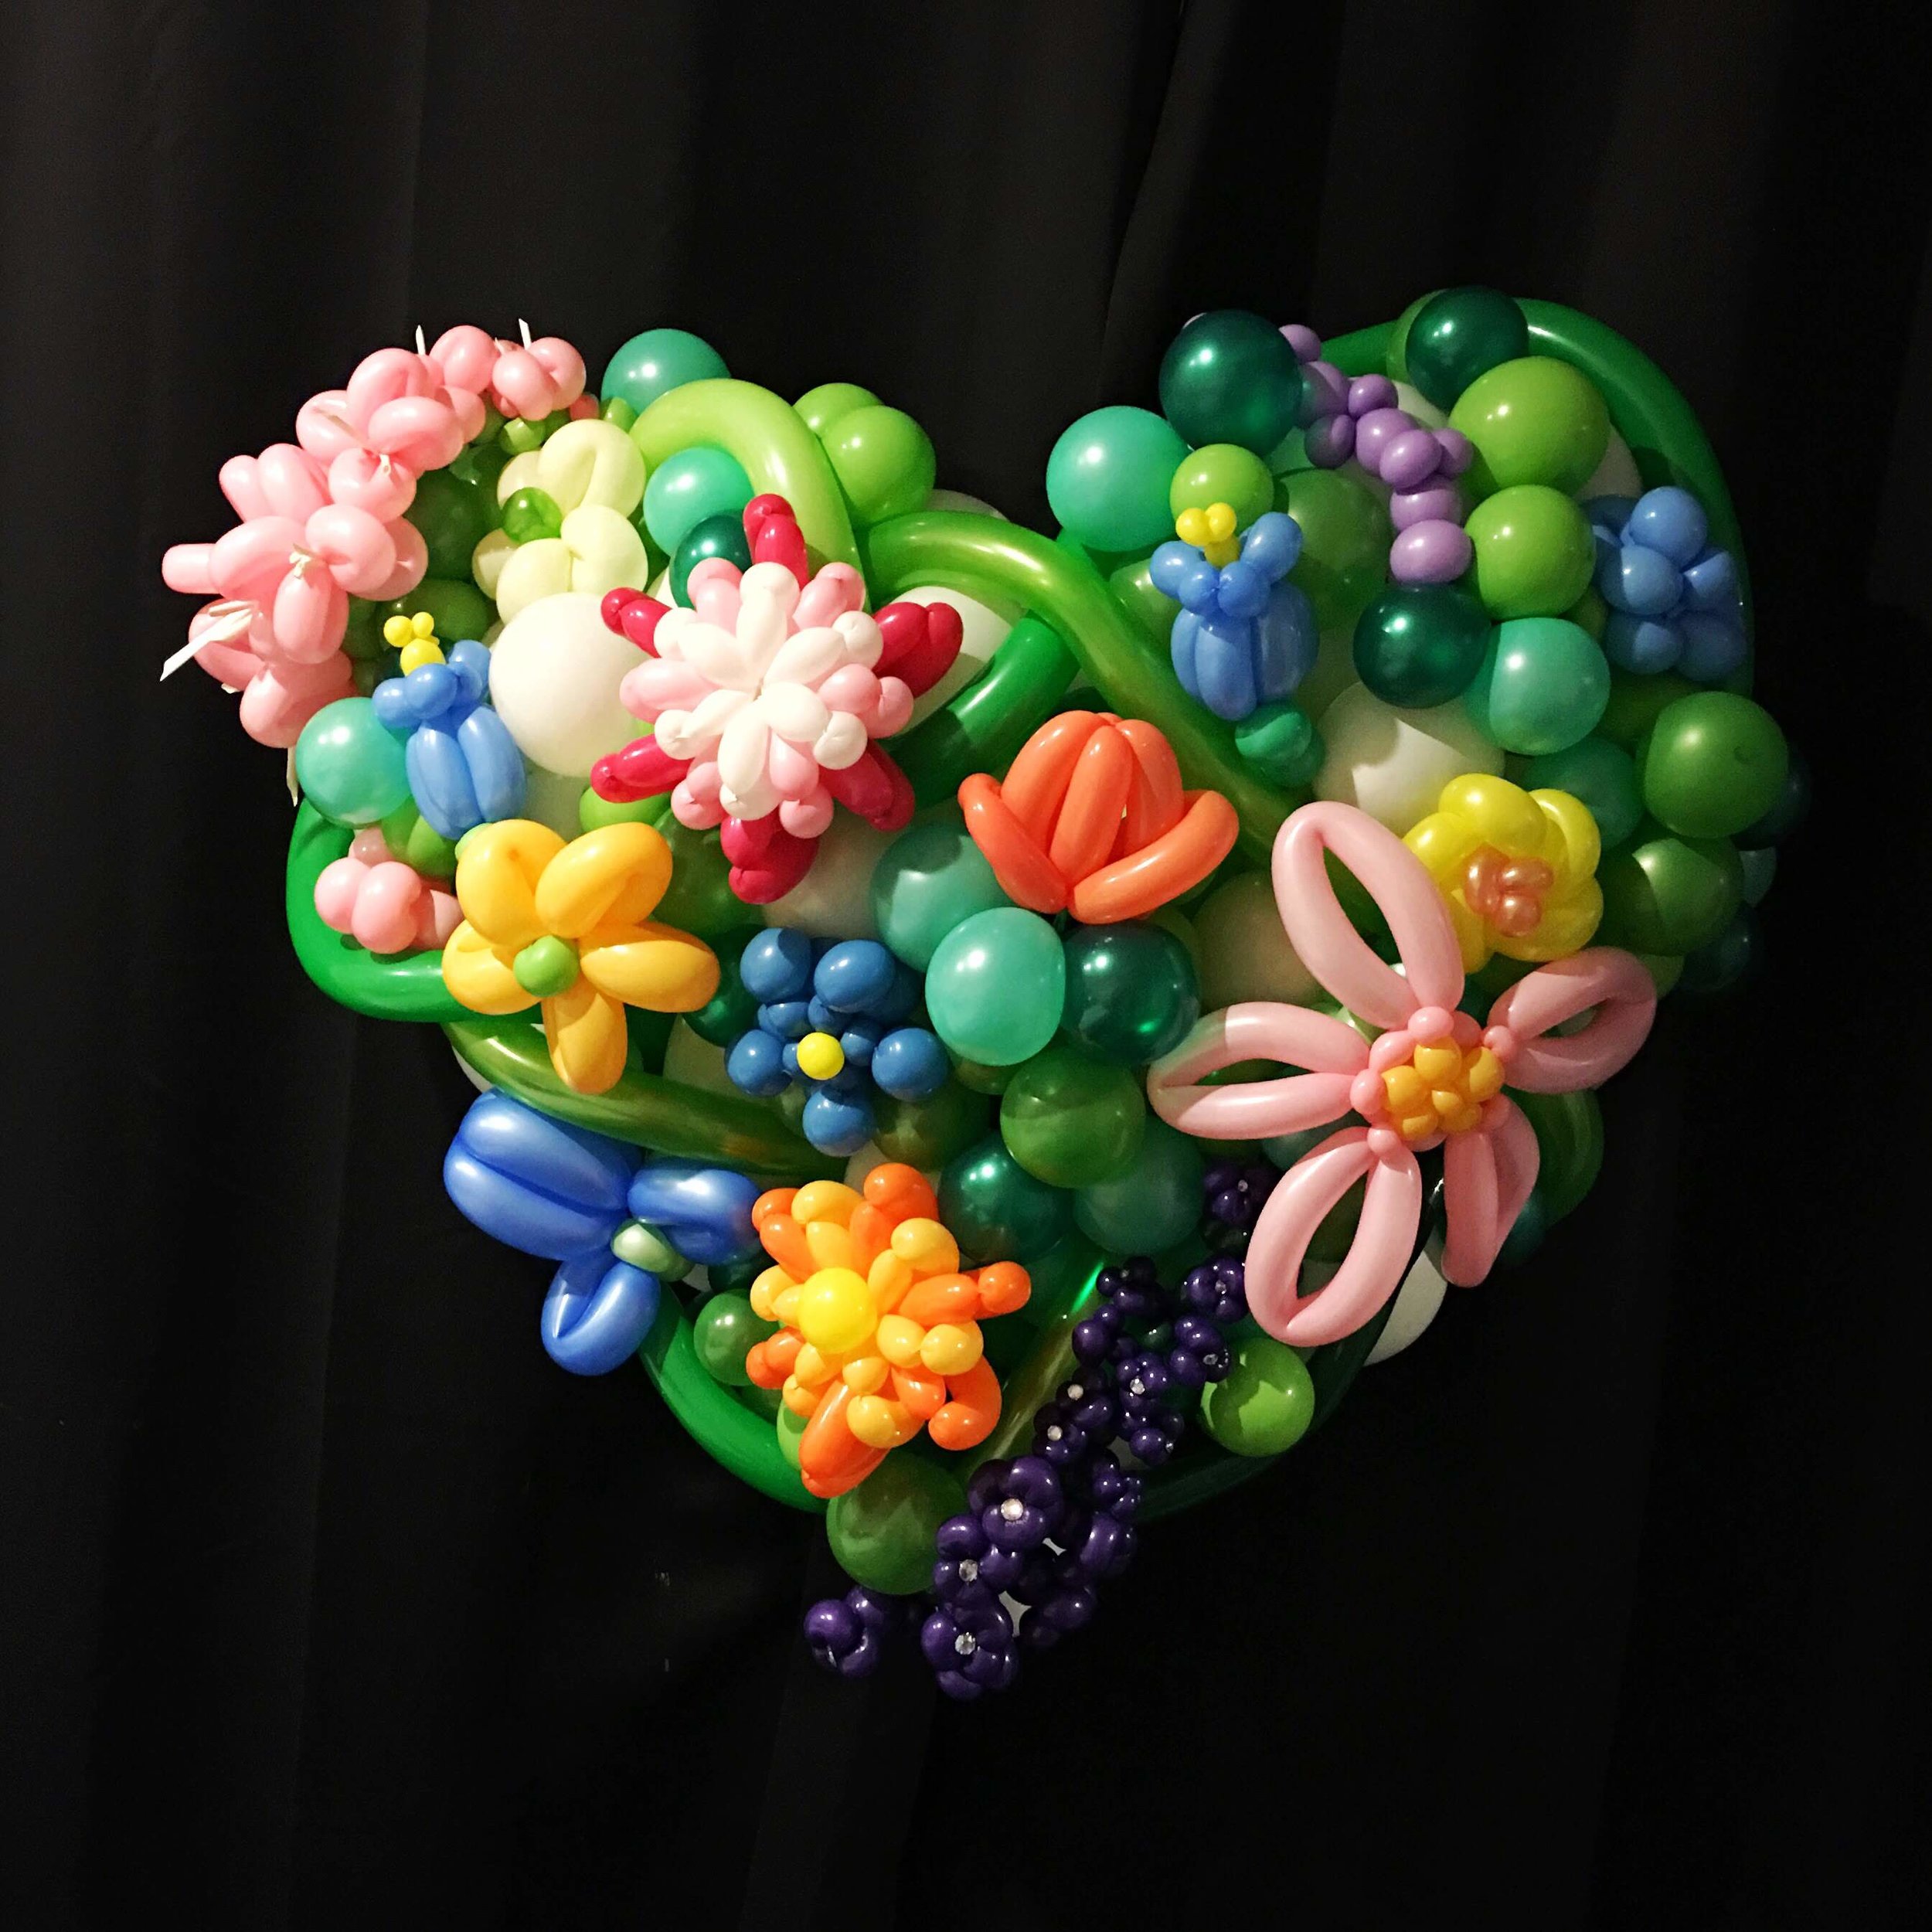 Balloon Flower Bouquet Gallery New York, NYC